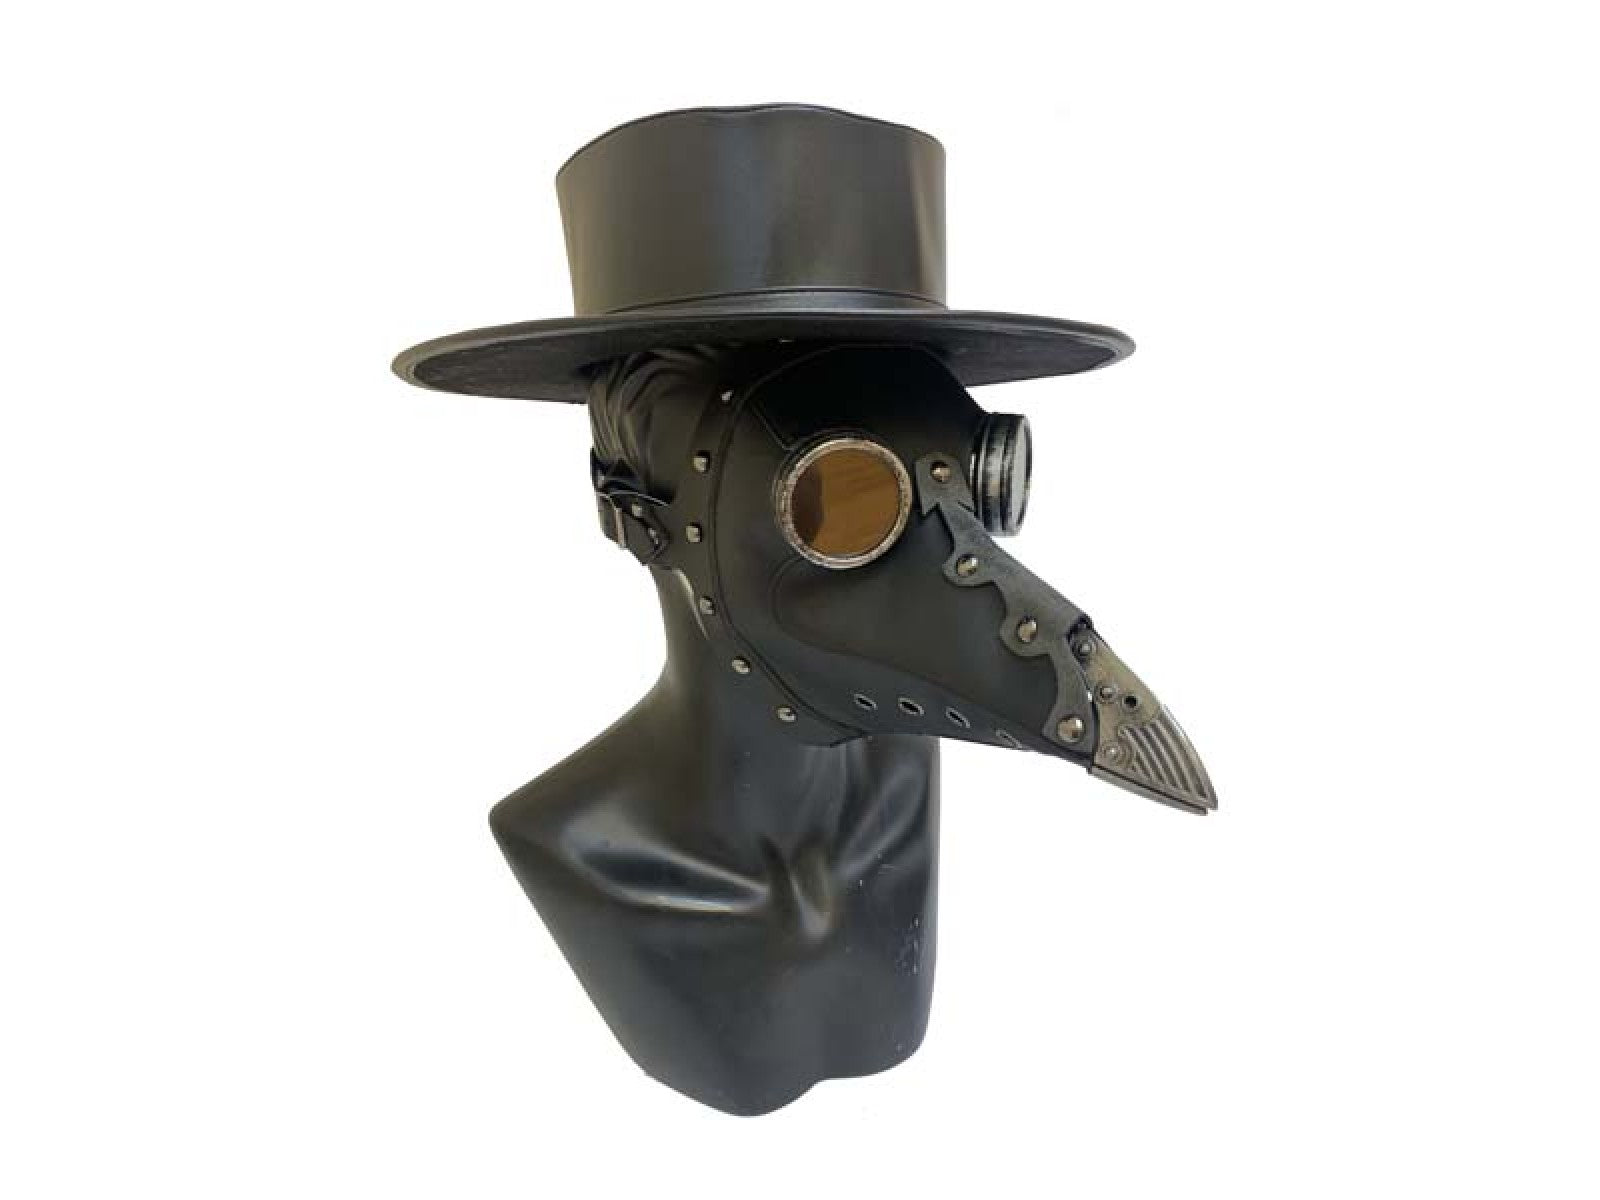 Tigerdoe Steampunk Halloween Costumes - Steampunk Hat with Goggles -  Steampunk Accessories - Gentleman's Costume (6 Pc Steampunk Set)